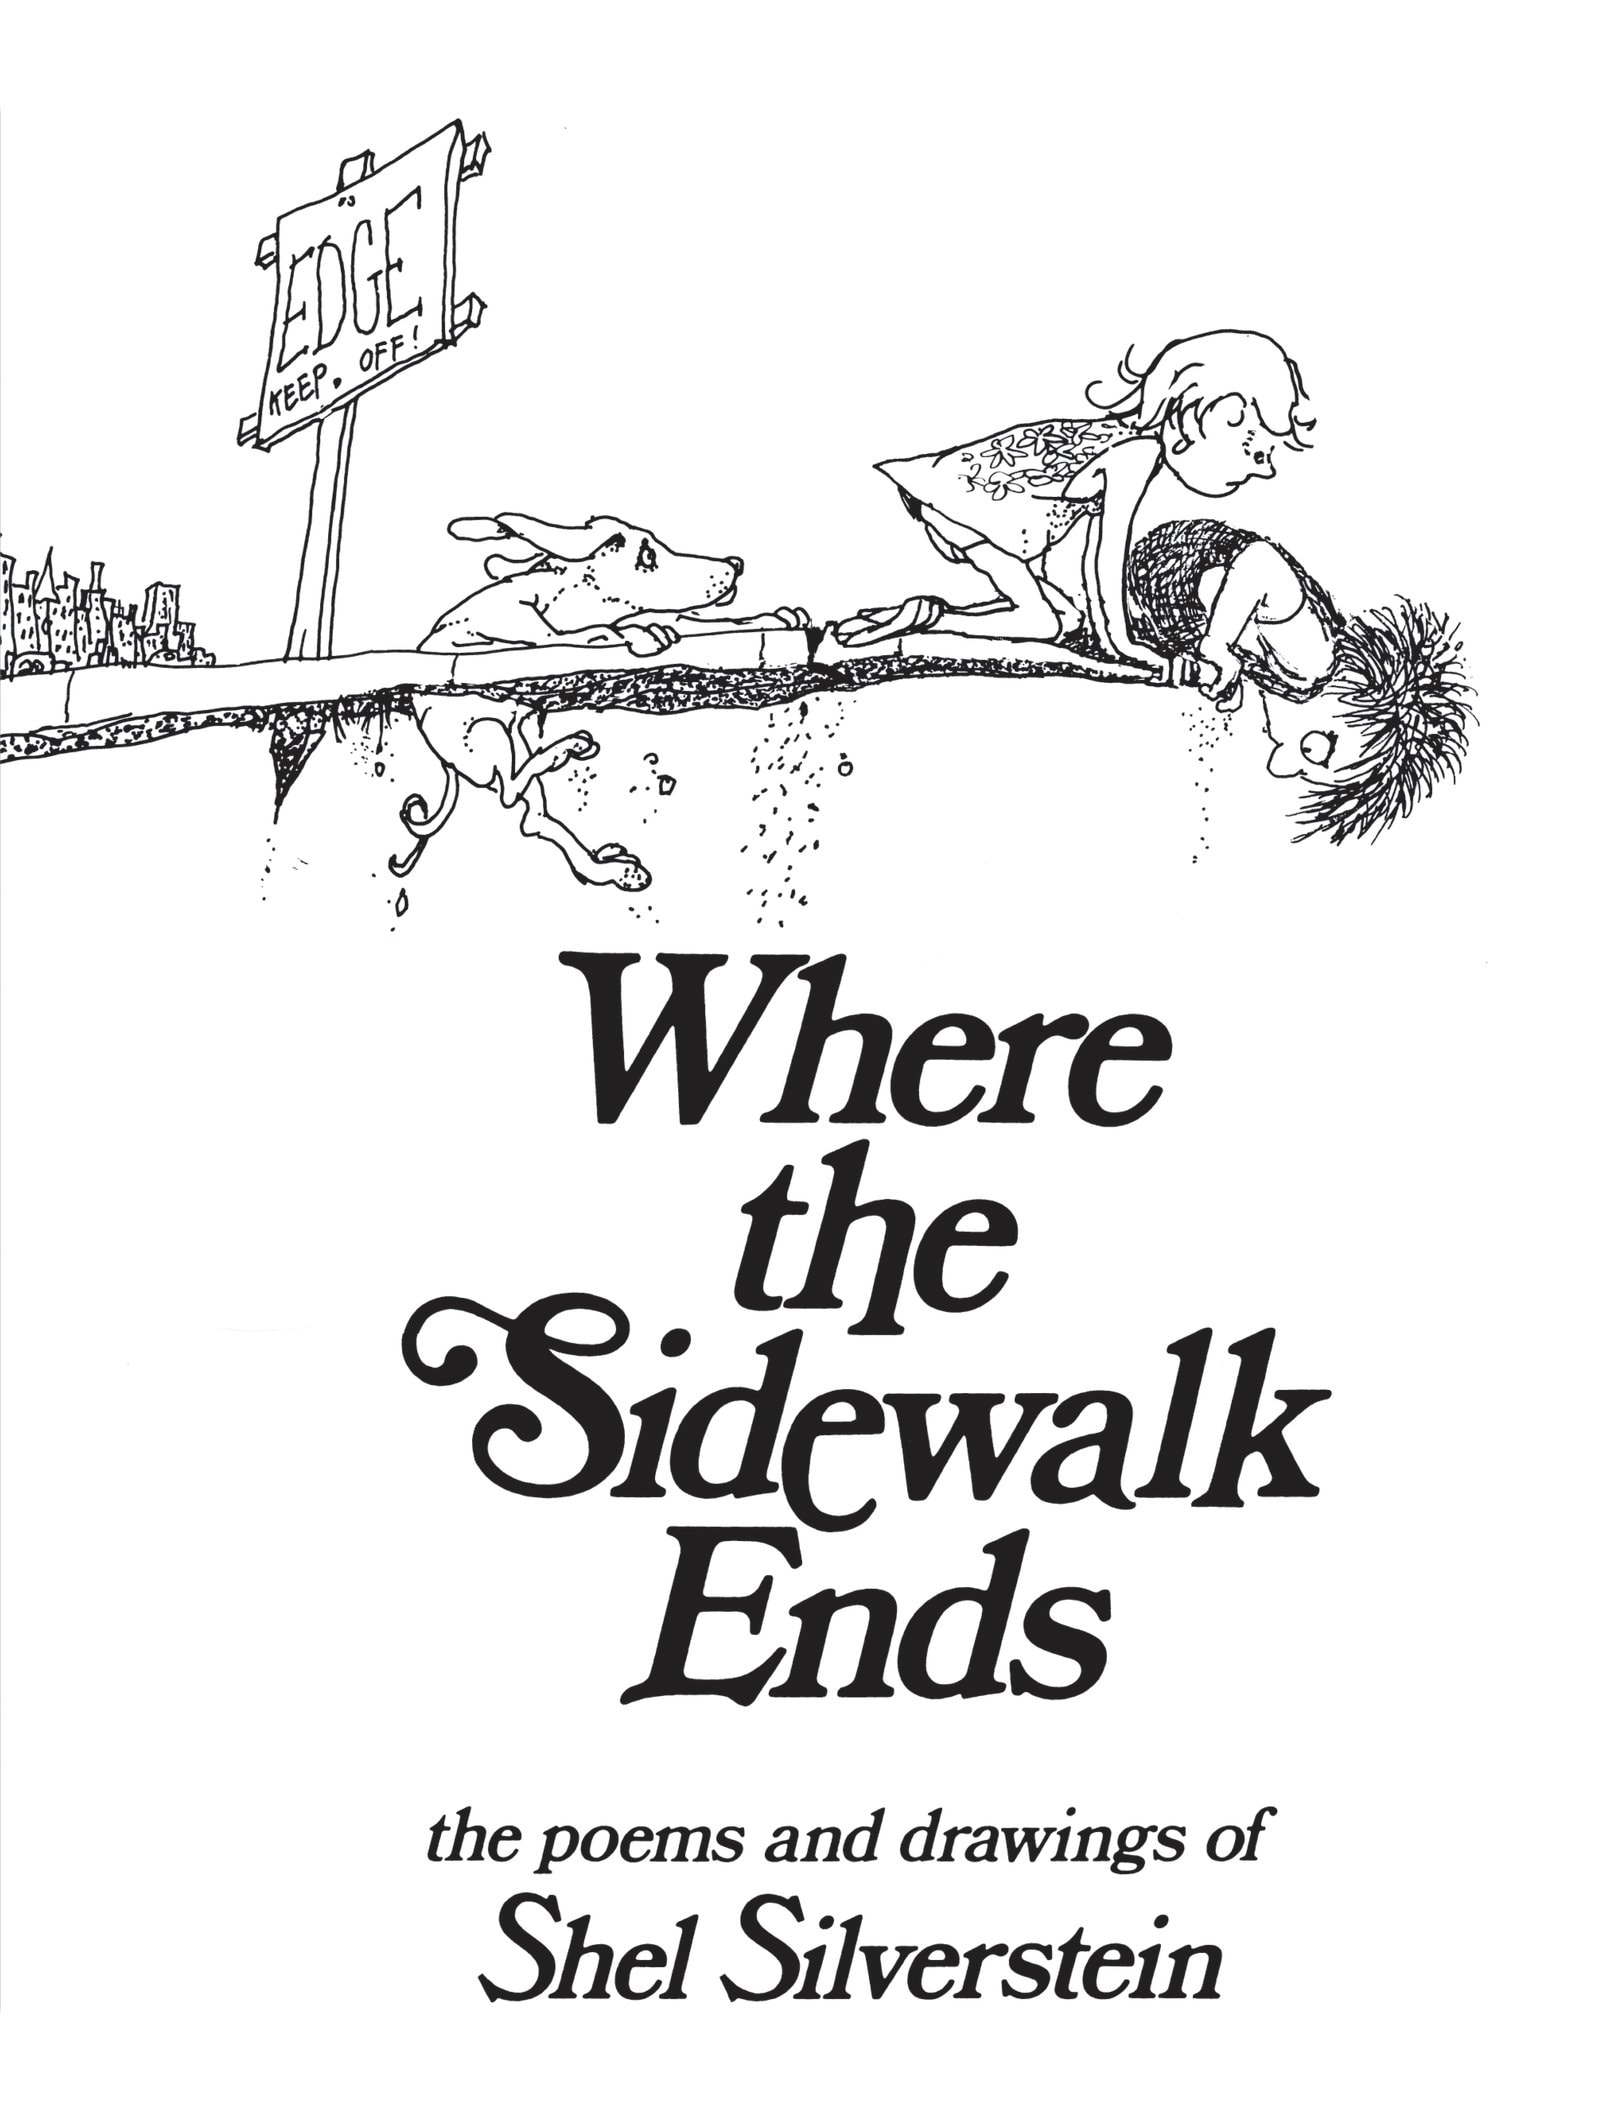 "Where the Sidewalk Ends" by Shel Silverstein